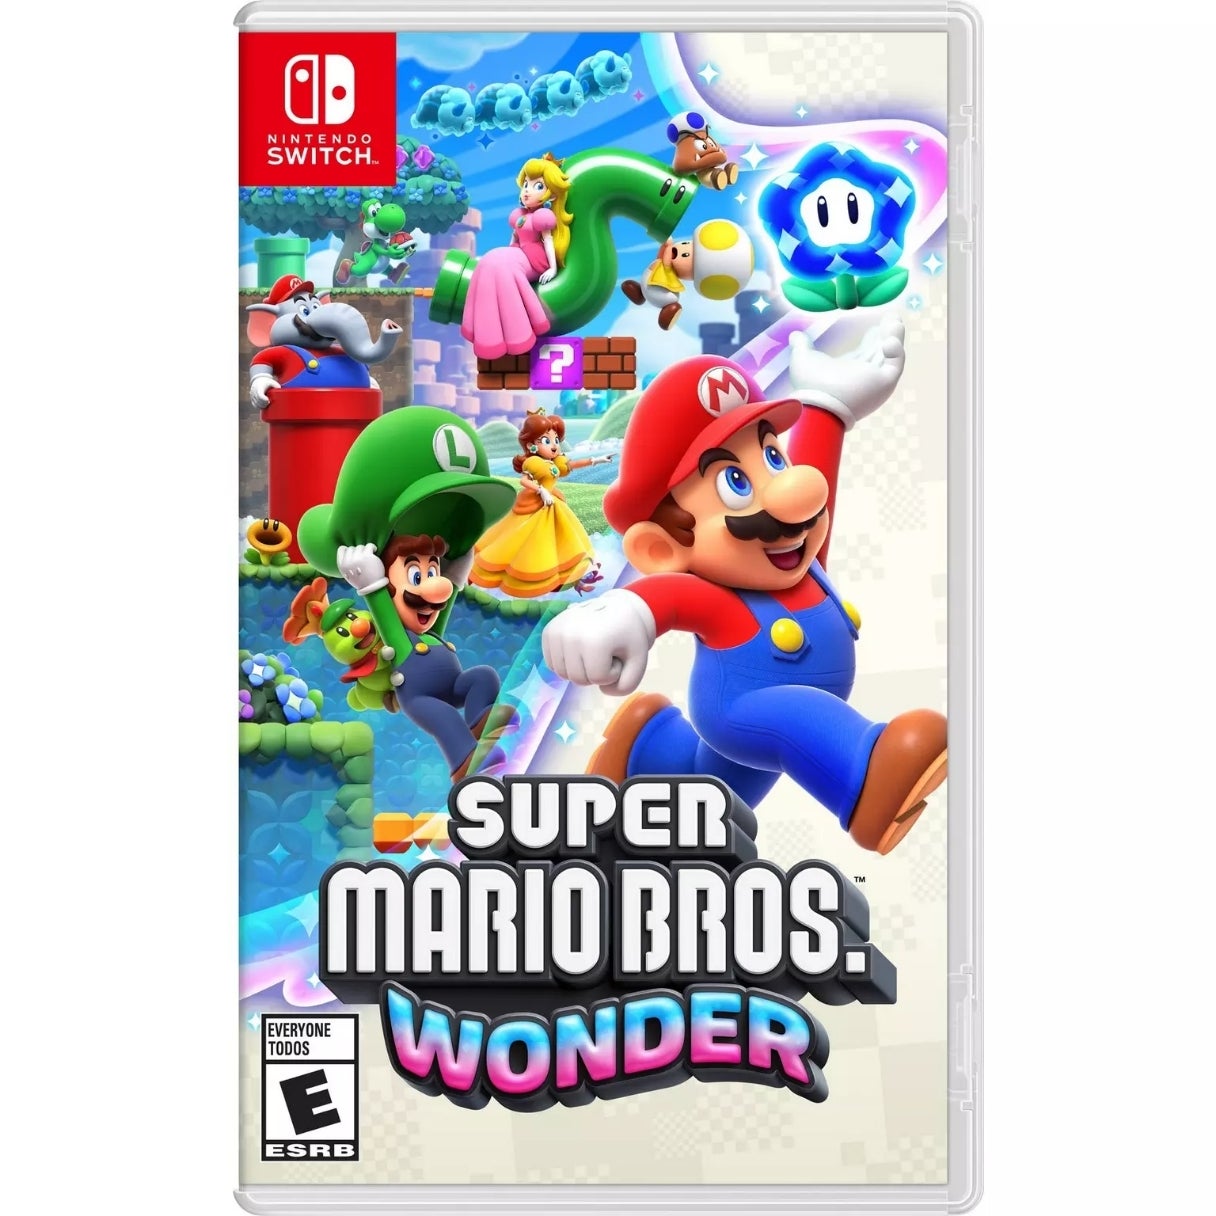 Super Mario Wonder! Part 2 - YoVideogames 